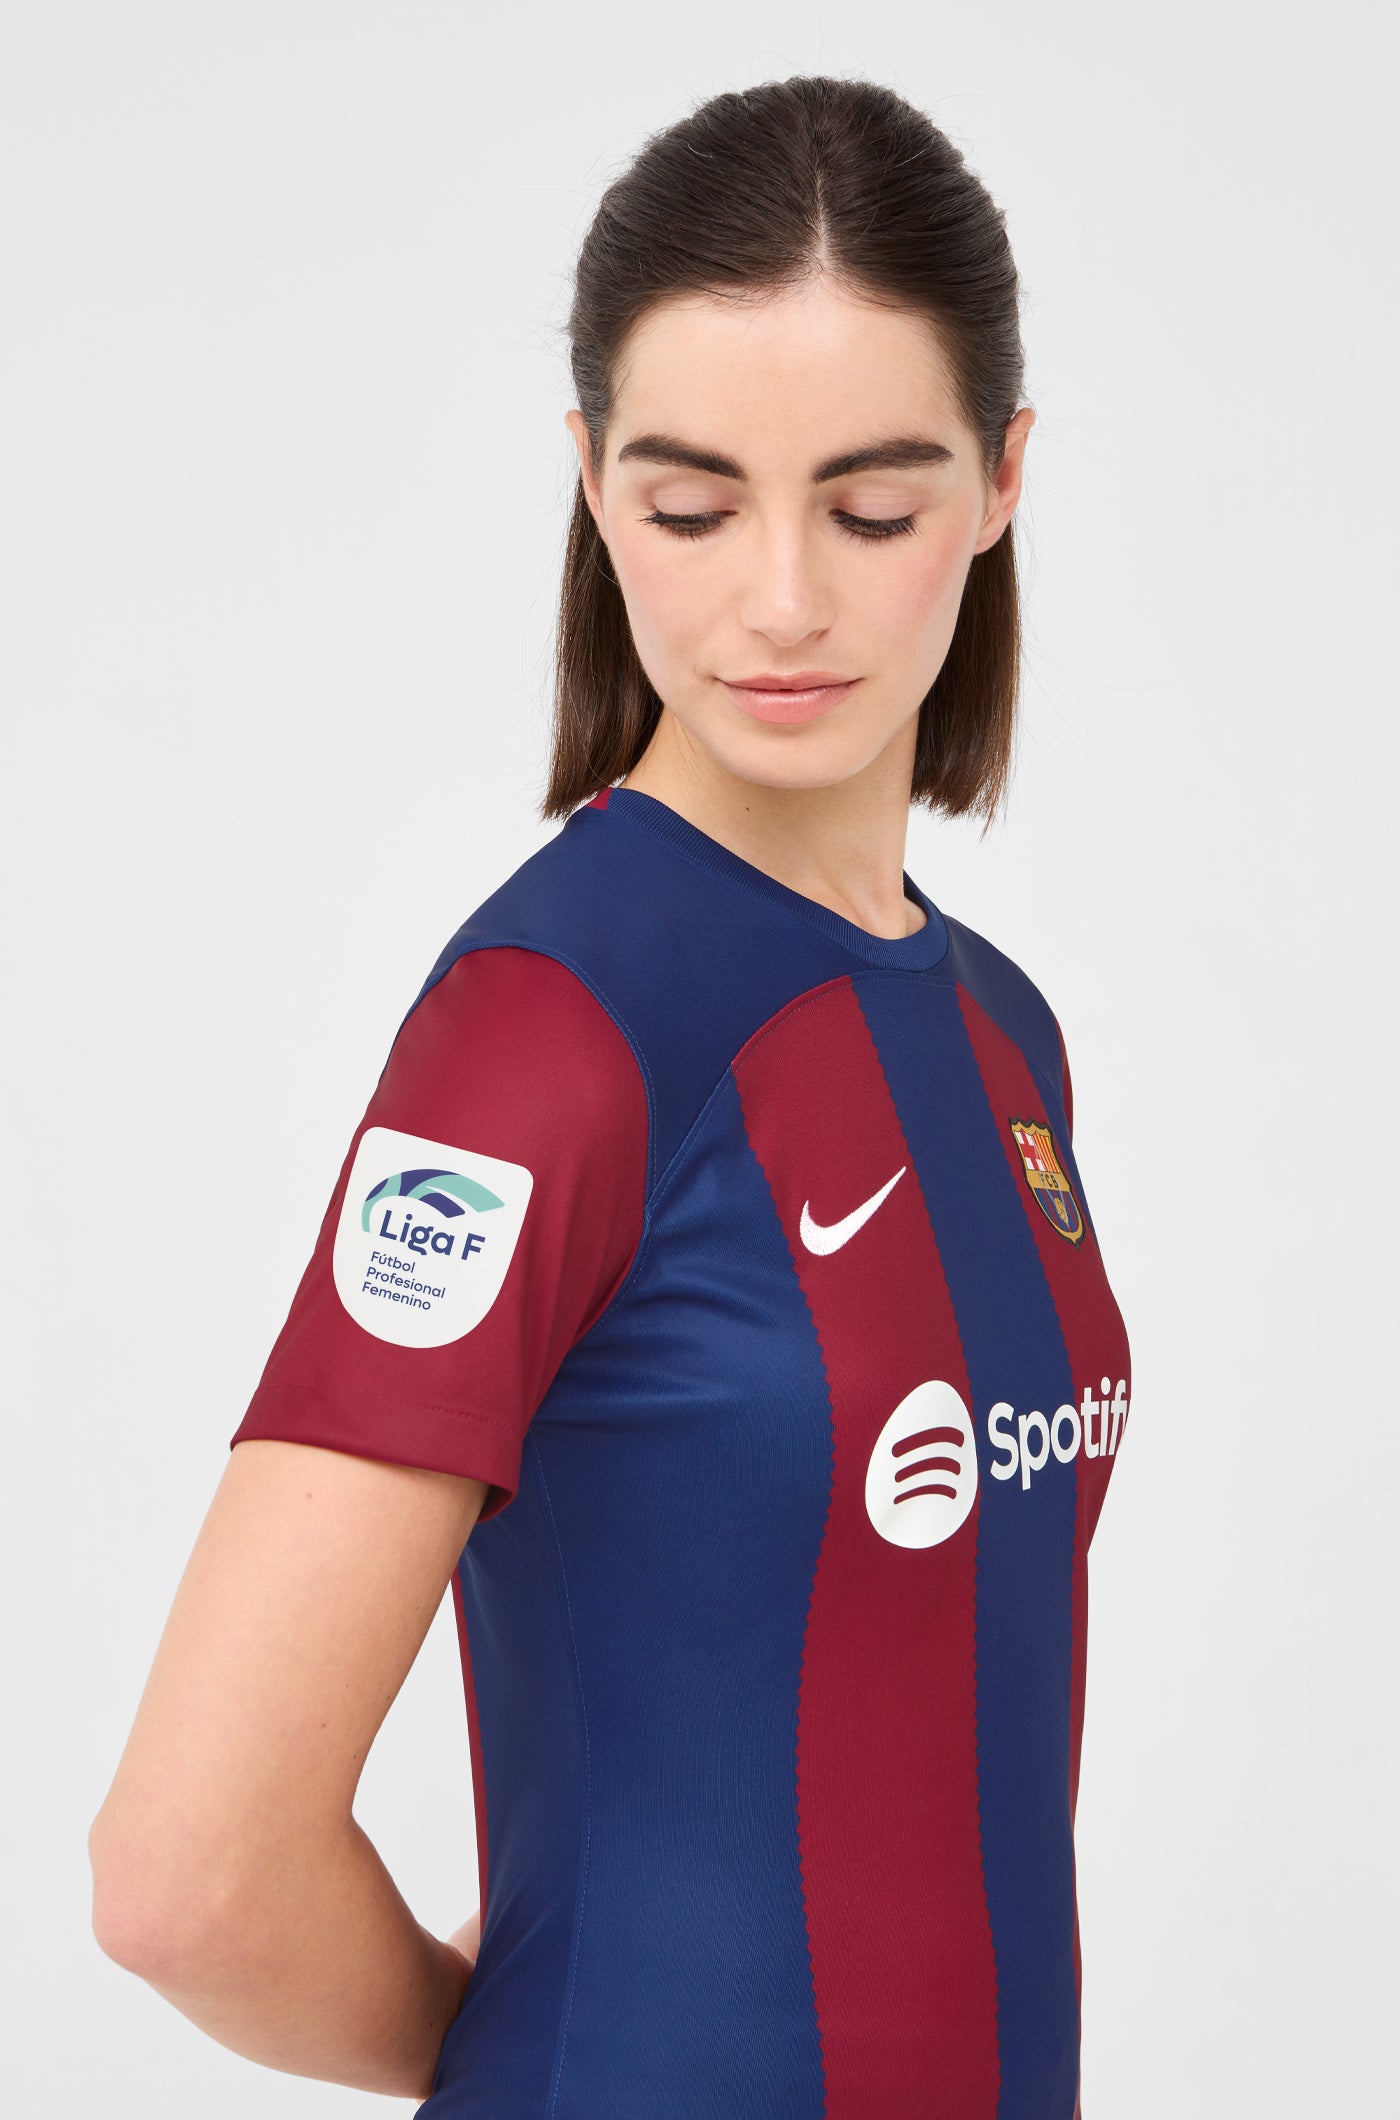 Liga F FC Barcelona home shirt 23/24 - Women - ROLFÖ